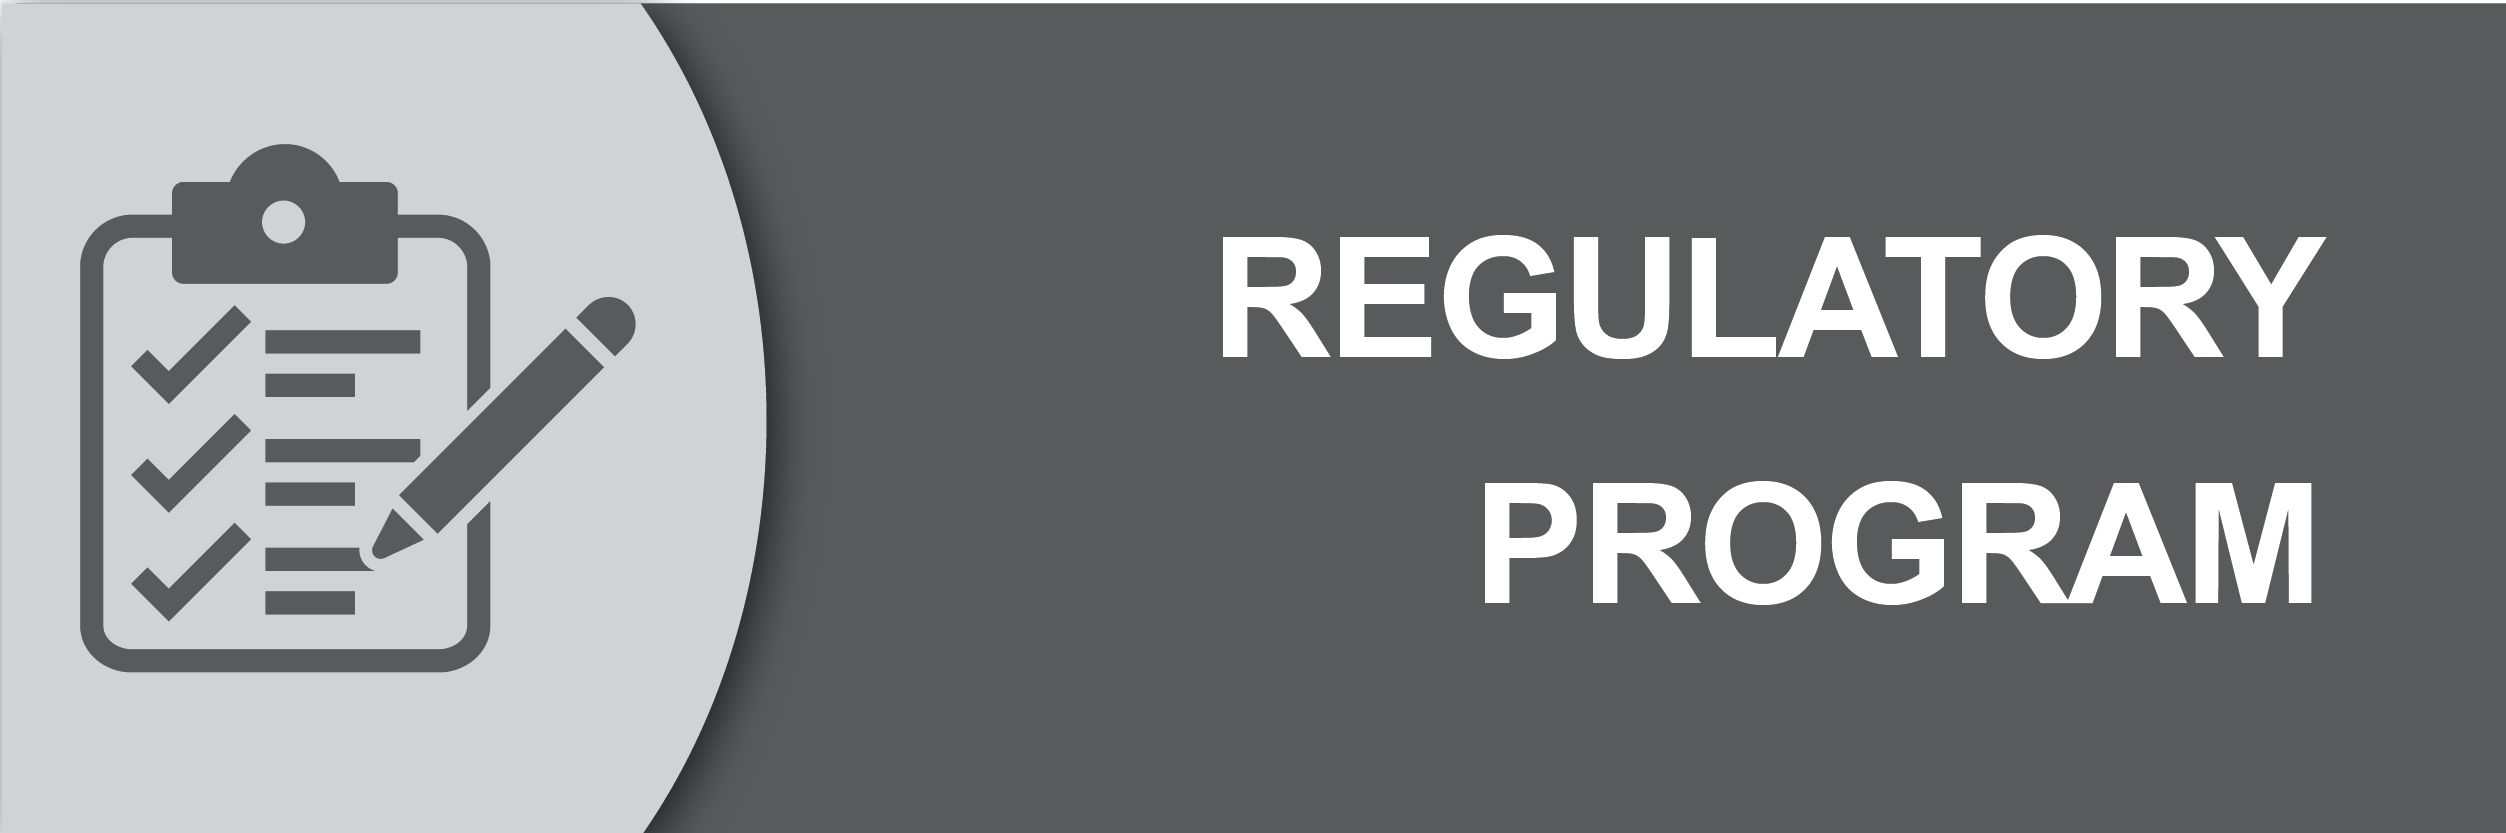 Icon with words "Regulatory Program"